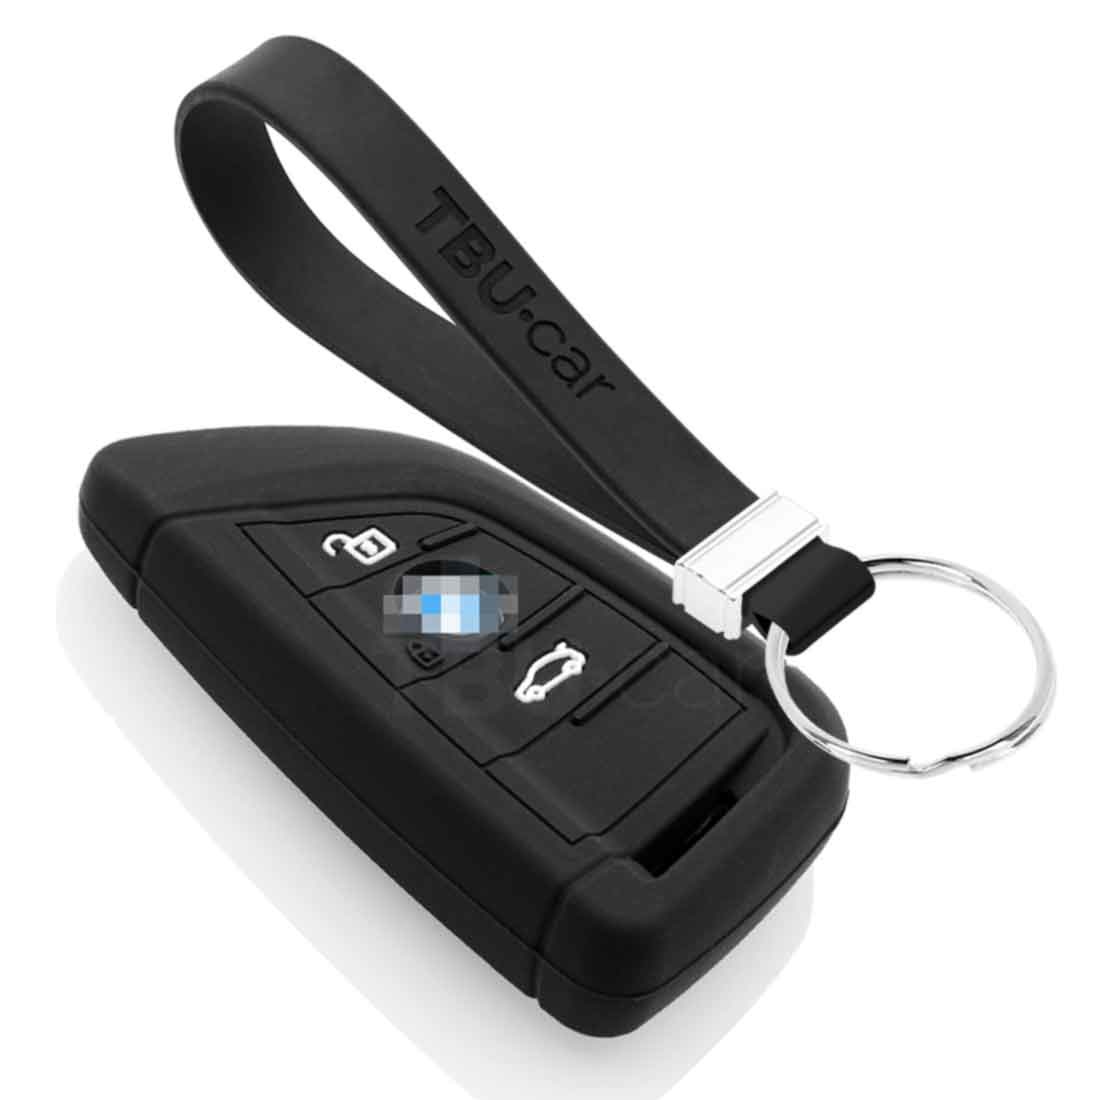 TBU car TBU car Sleutel cover compatibel met BMW - Silicone sleutelhoesje - beschermhoesje autosleutel - Zwart